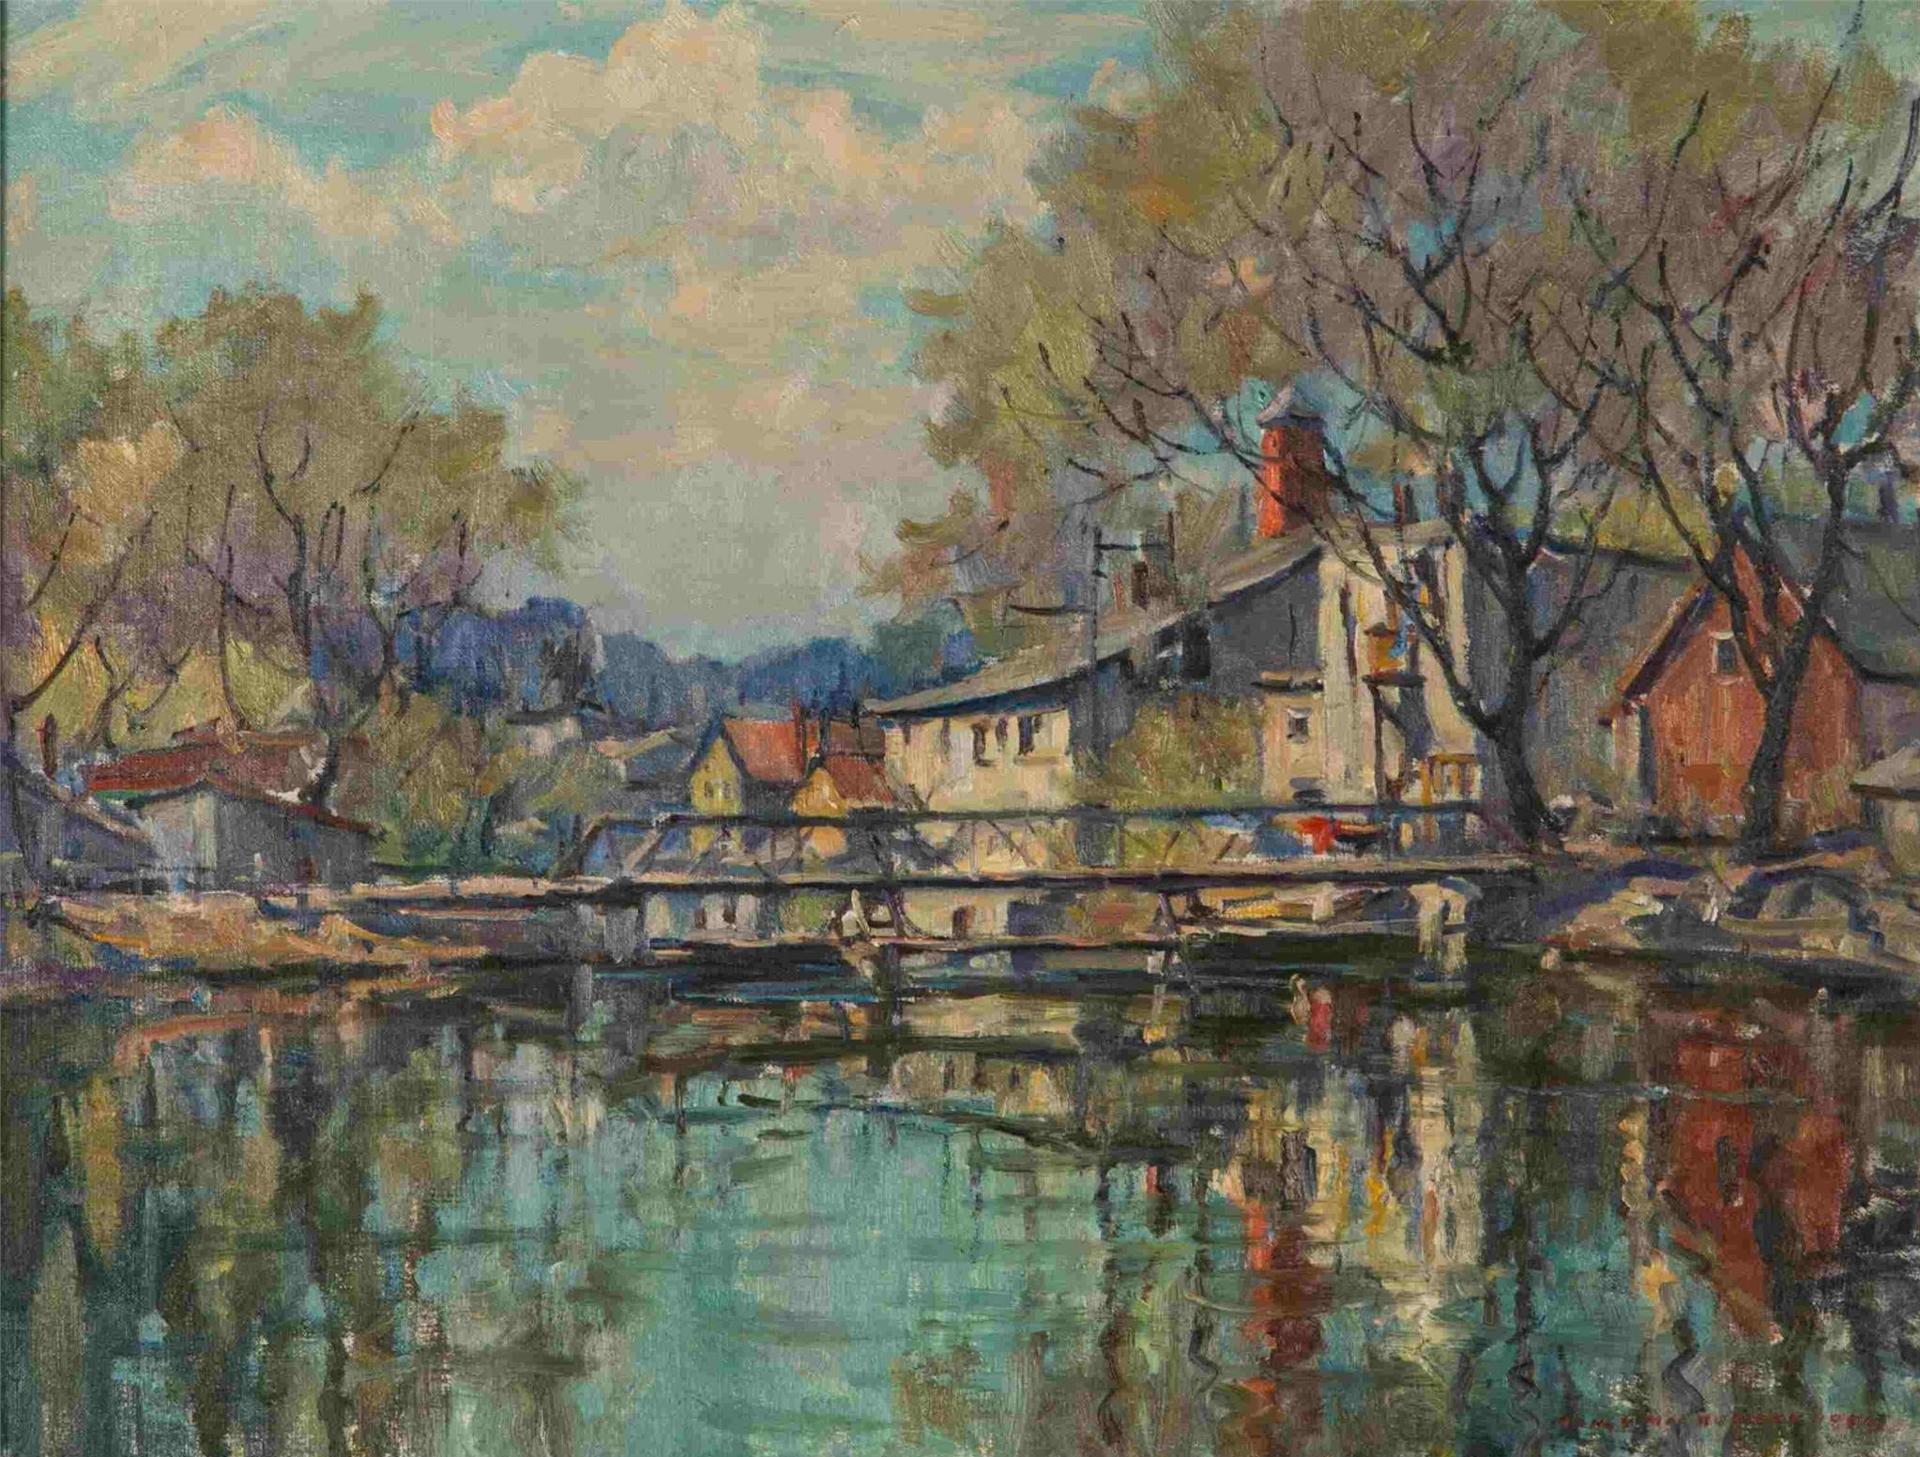 Manly Edward MacDonald (1889-1971) - On the Moira River, Belleville (1950)